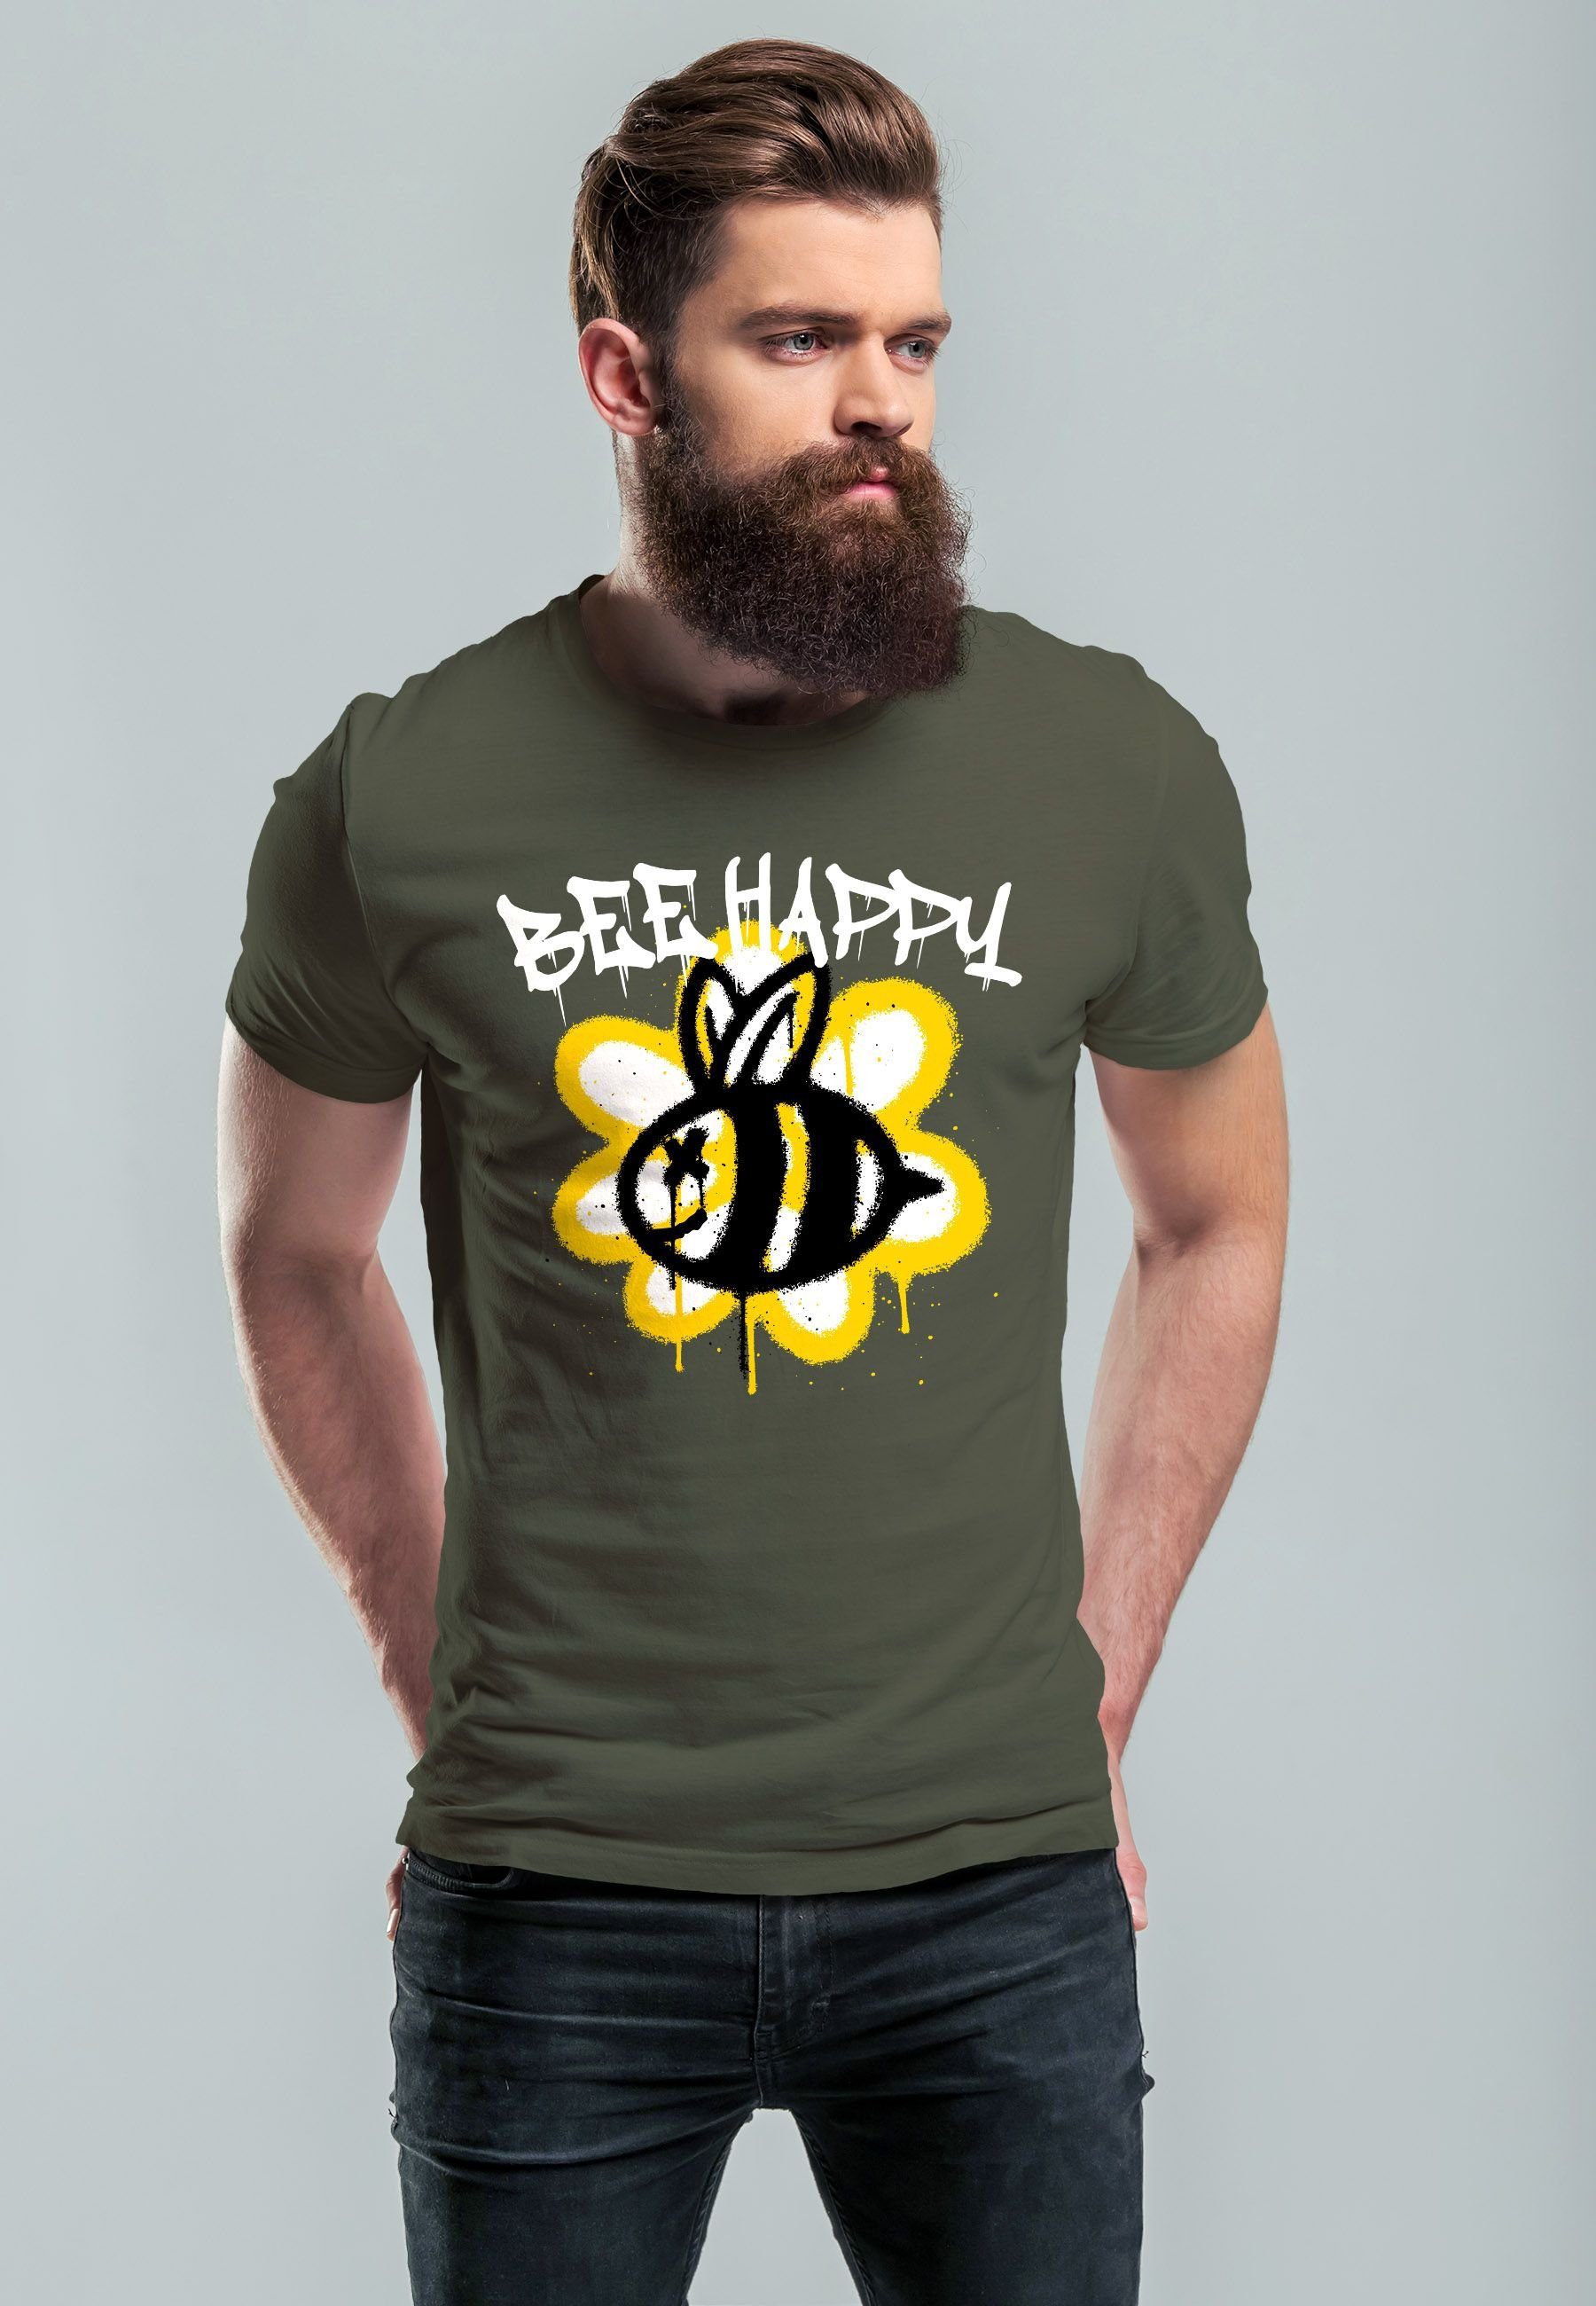 mit T-Shirt Neverless Graffiti Print army Happy Herren Blume SchriftzugFashi Biene Print-Shirt Aufdruck Bee